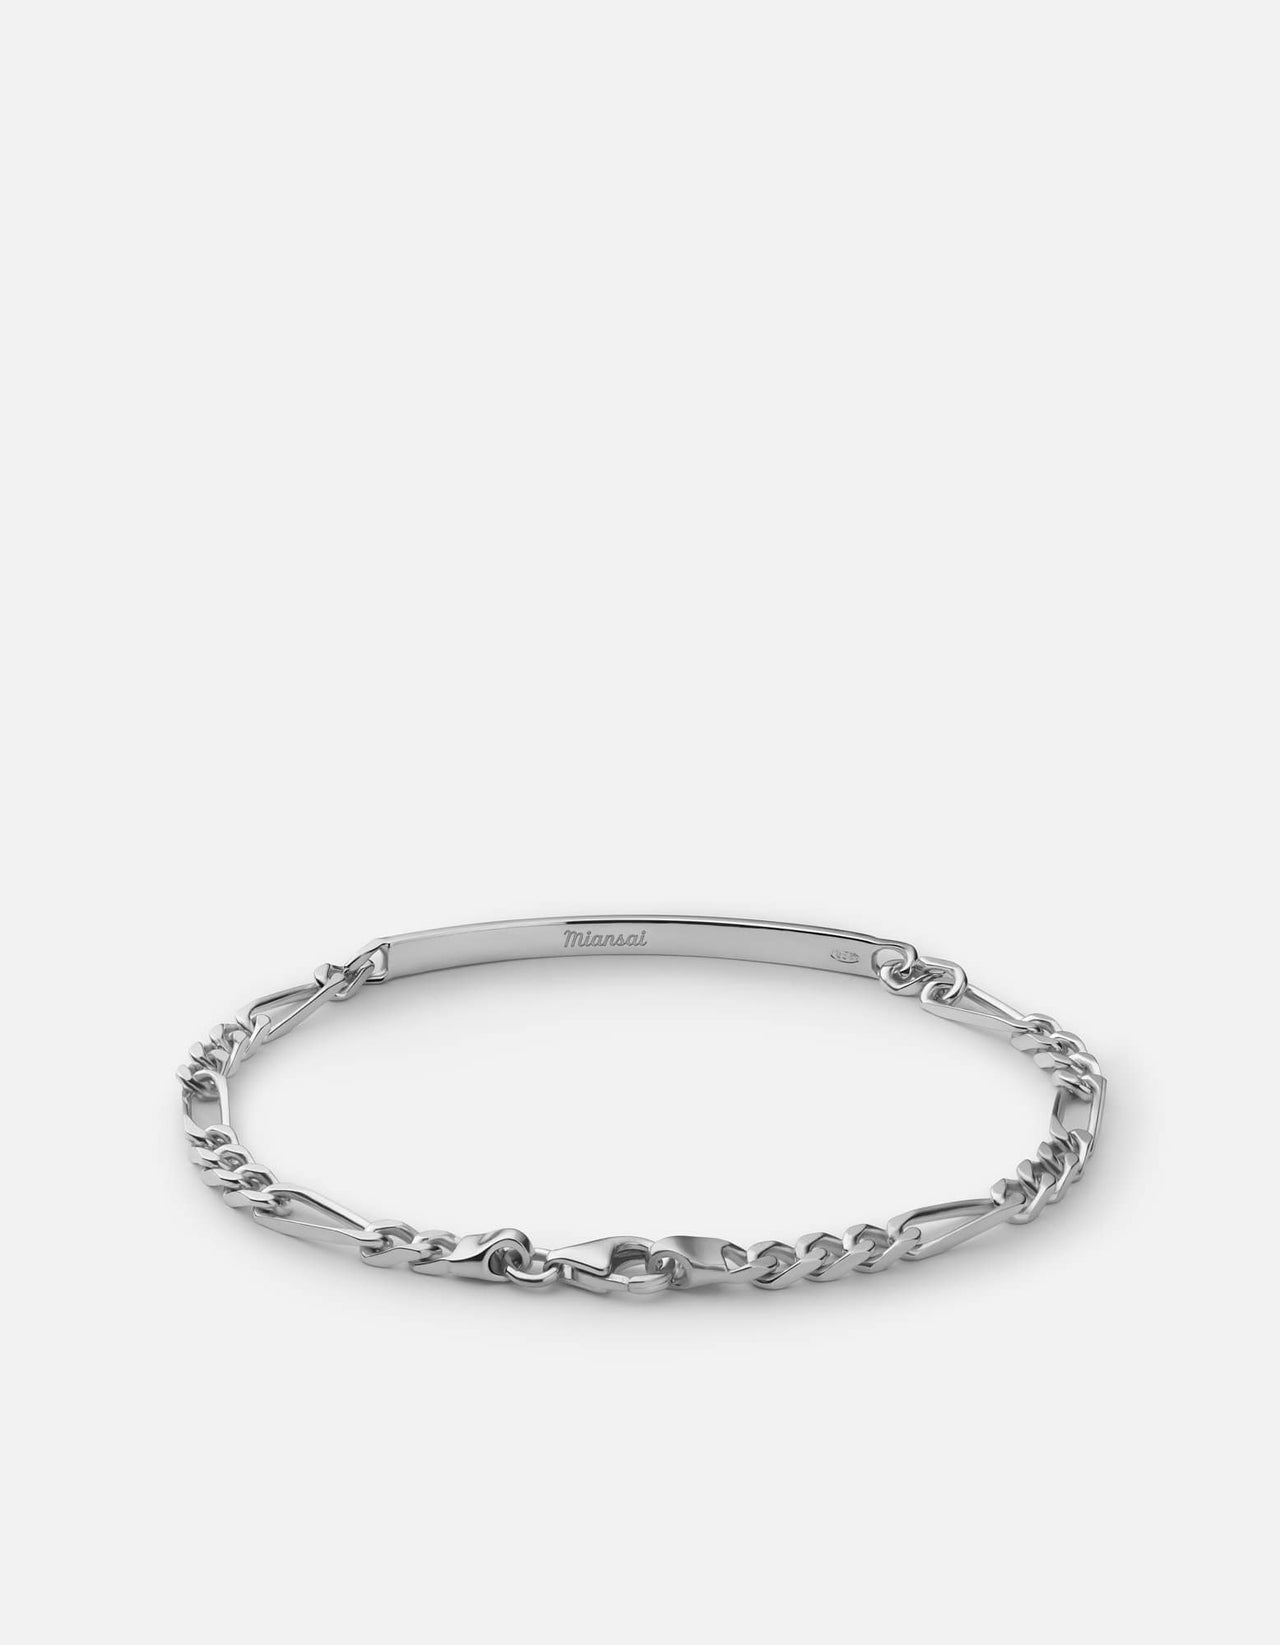 Miansai Men's 3mm Sterling Silver Cuban Chain Necklace